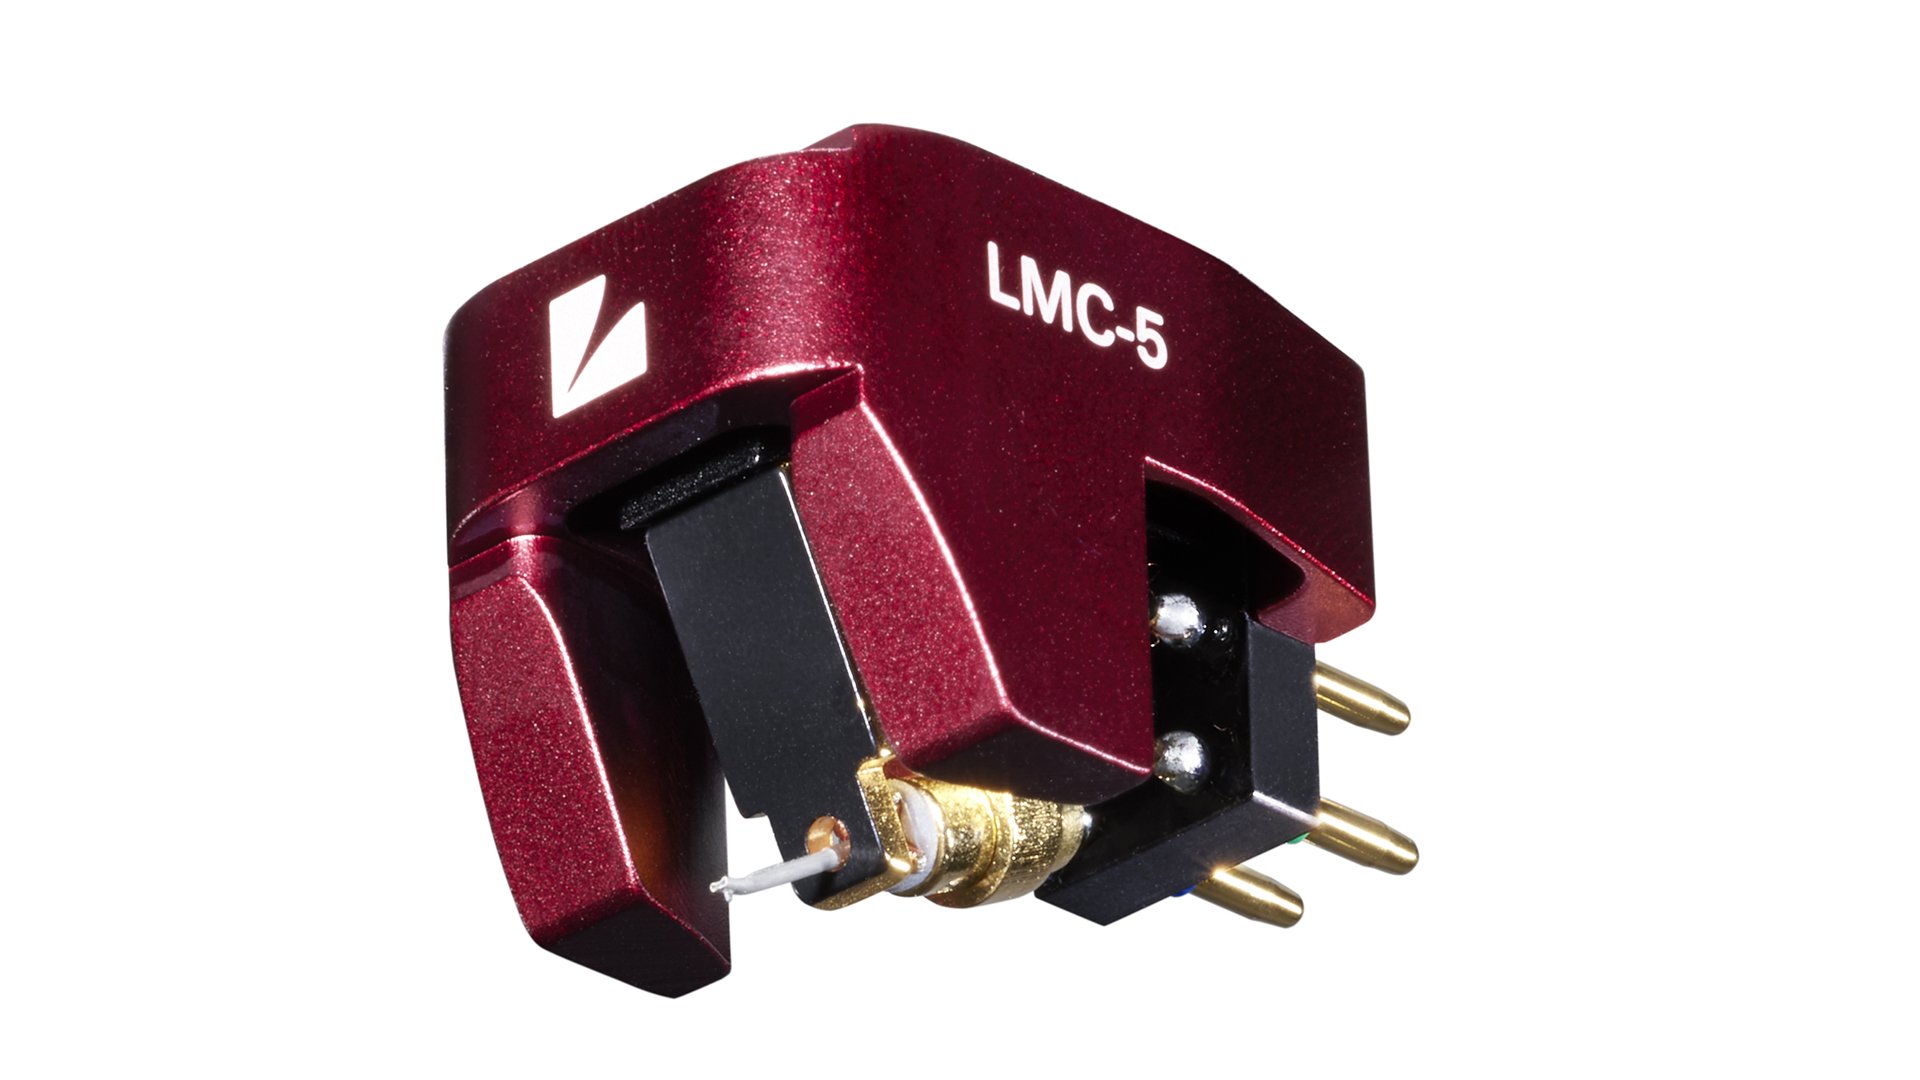 Luxman LMC-5 MC Phono Cartridge - Analogue Seduction